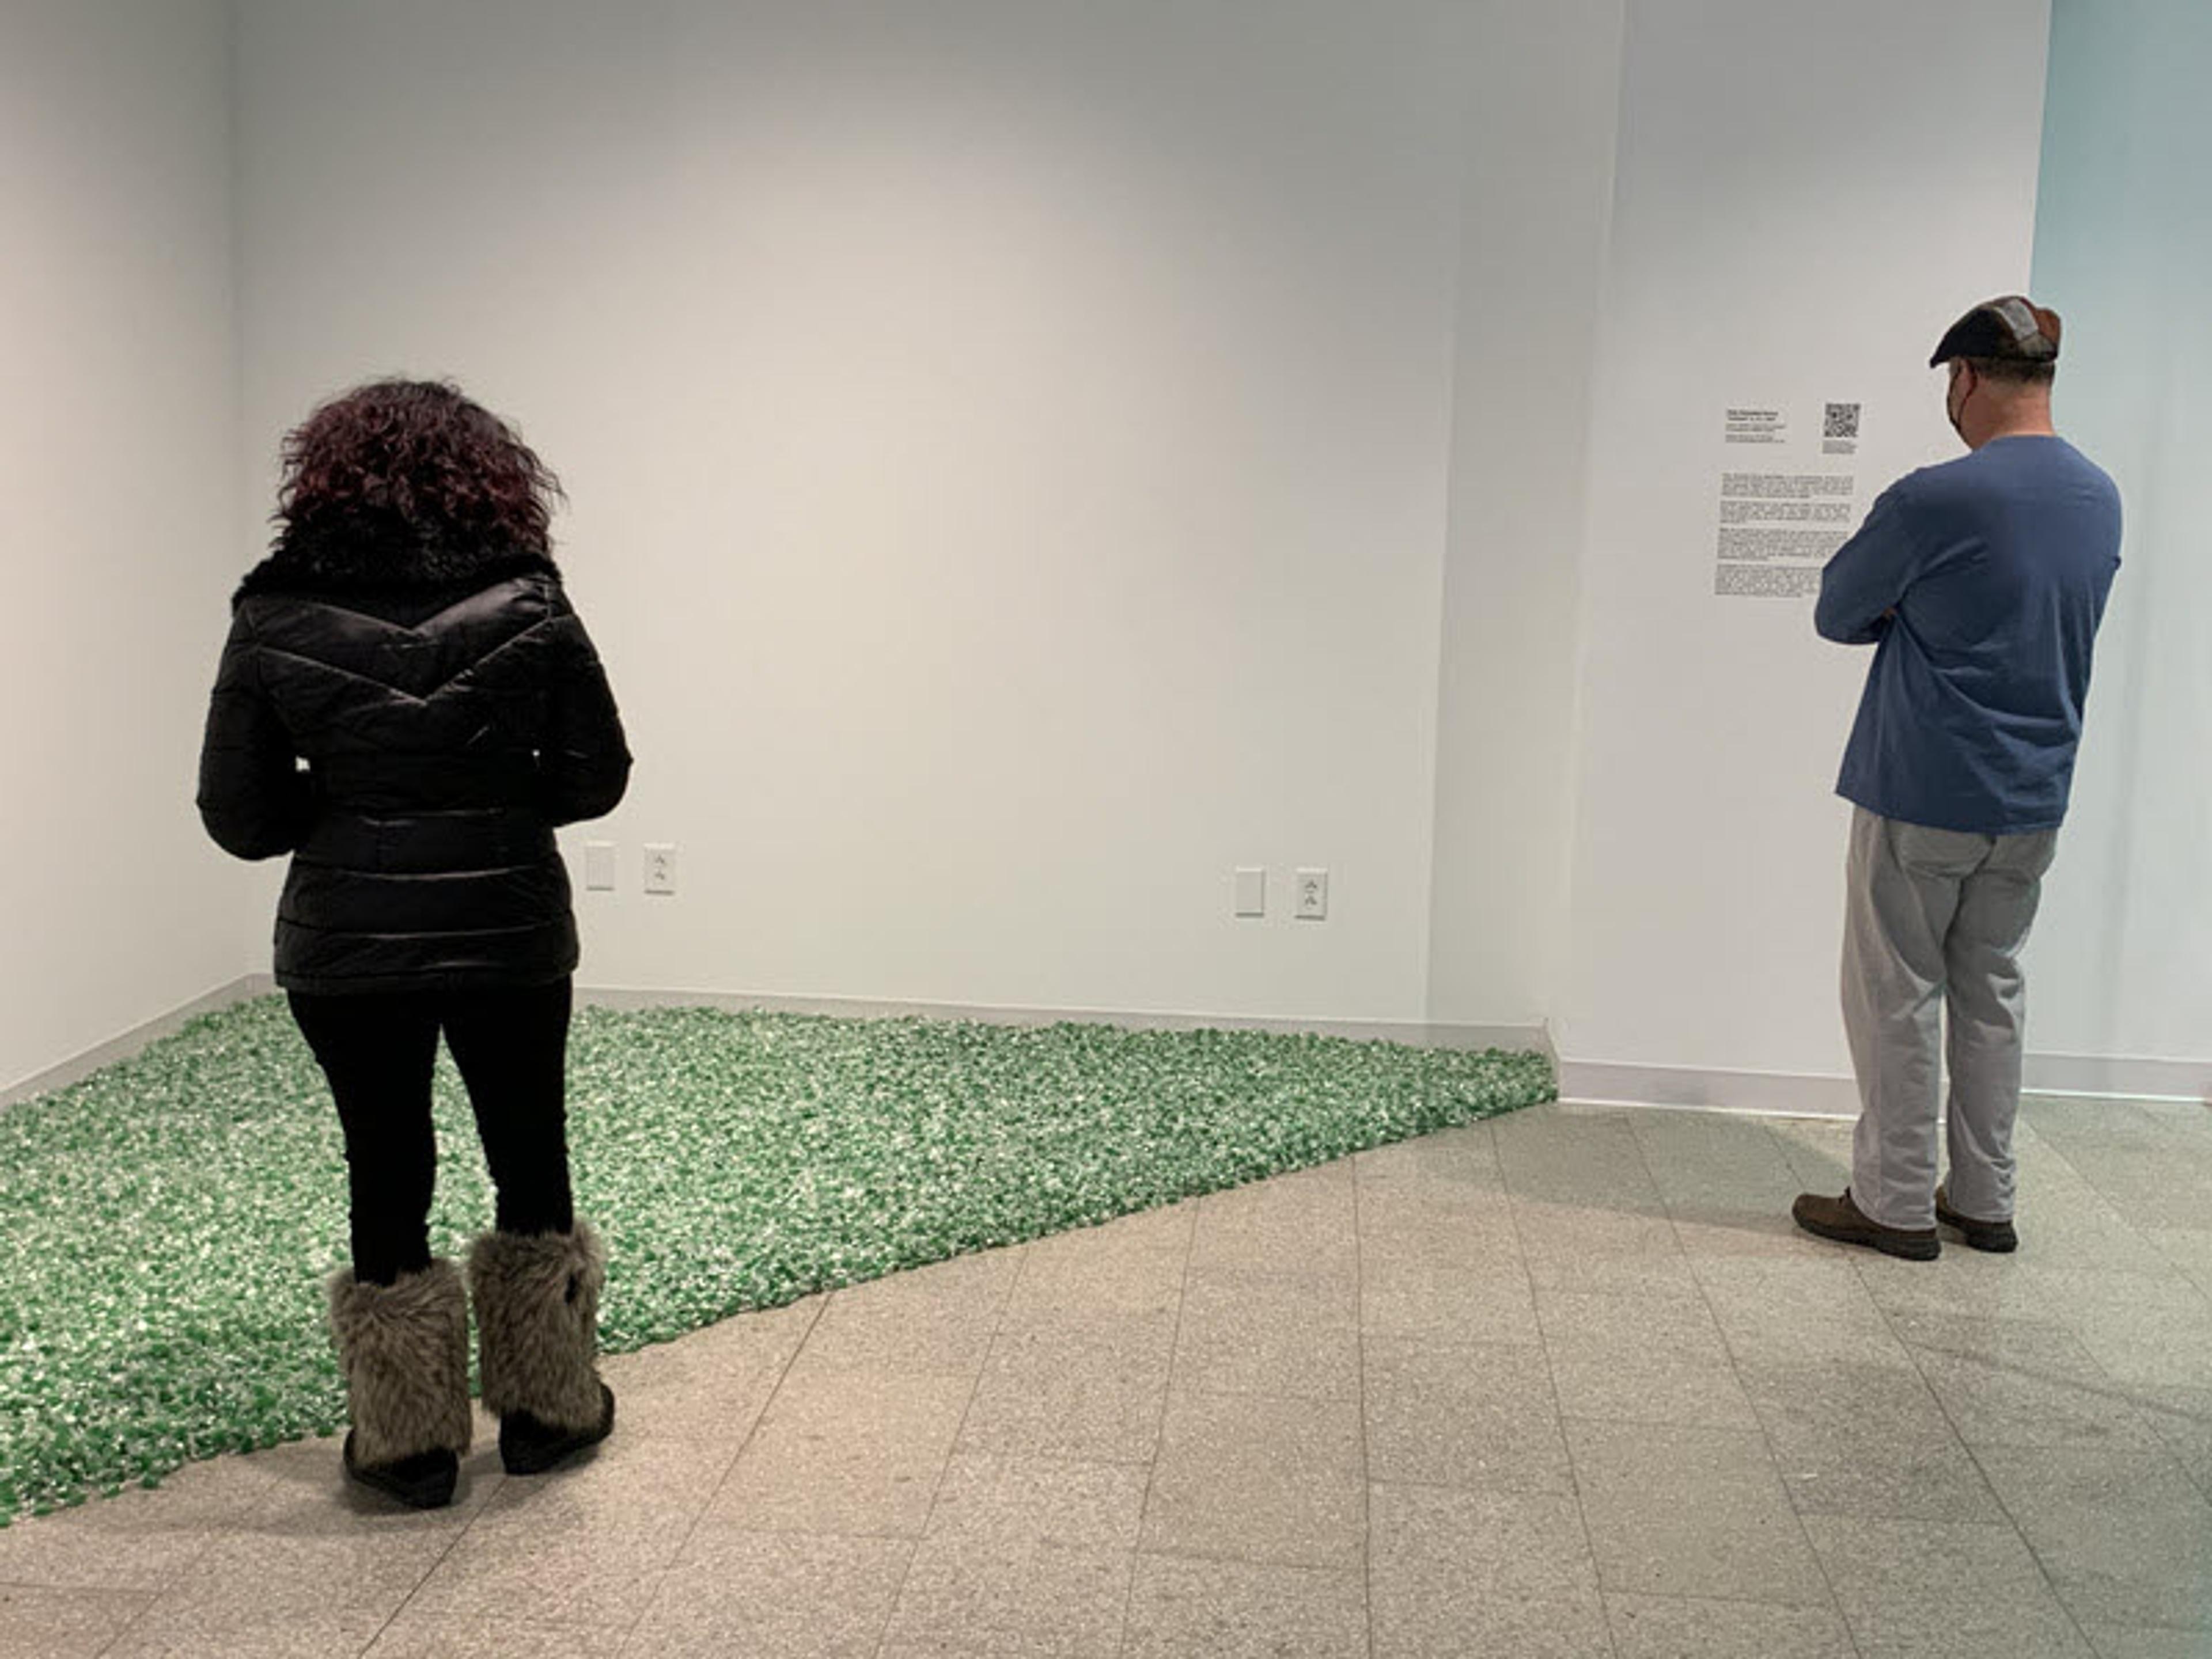 Felix Gonzalez-Torres  "Untitled" (L.A.) installation Rit City Art Space